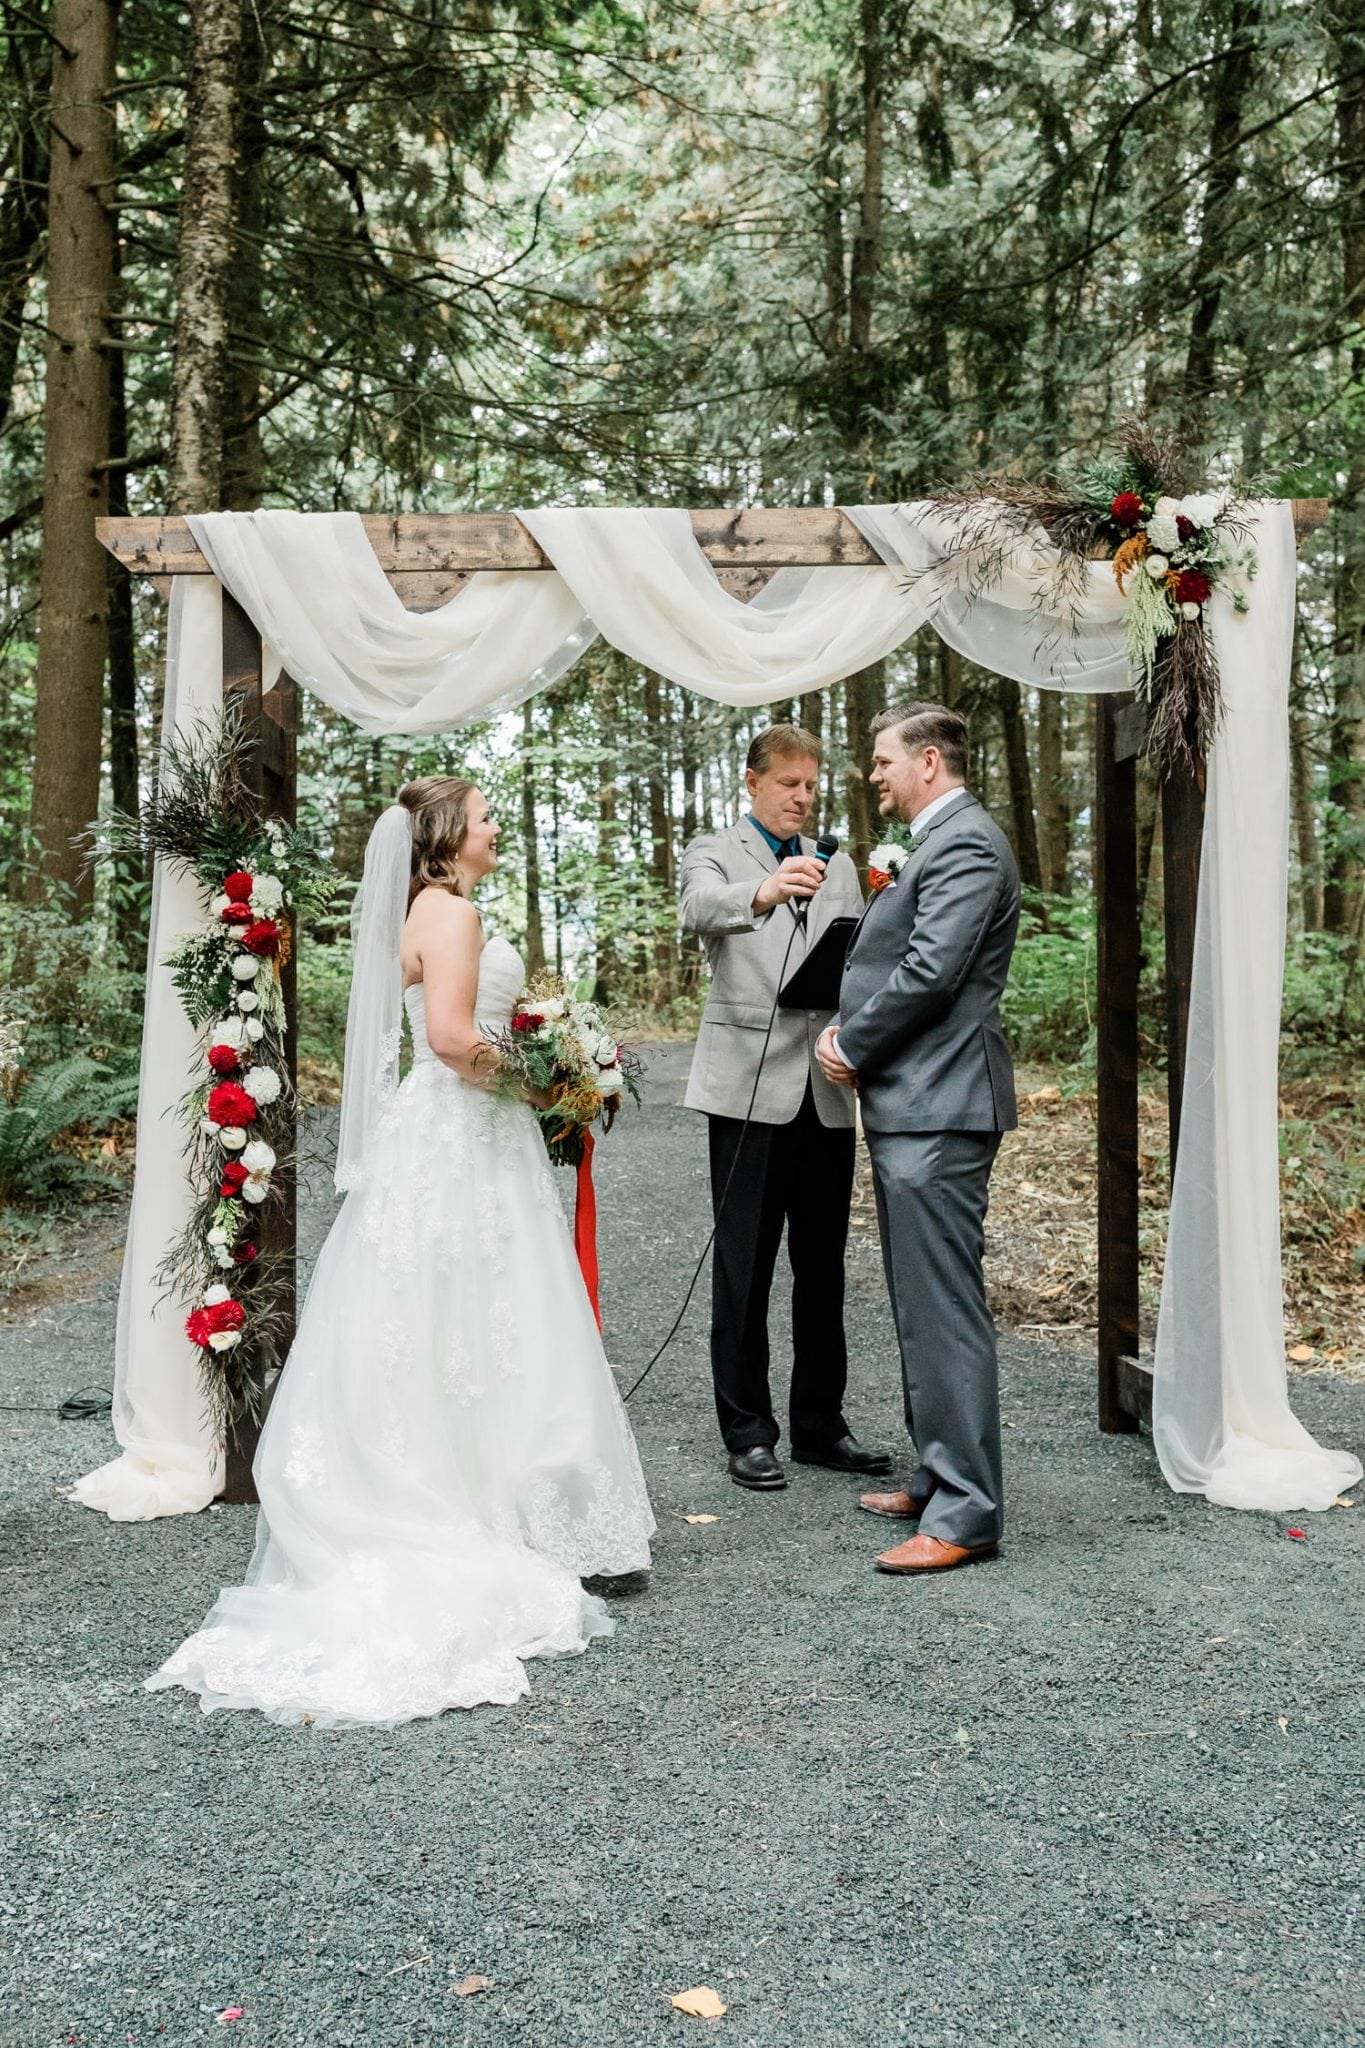 Rustic wedding ceremony photo in Langley | Vancouver wedding photographer